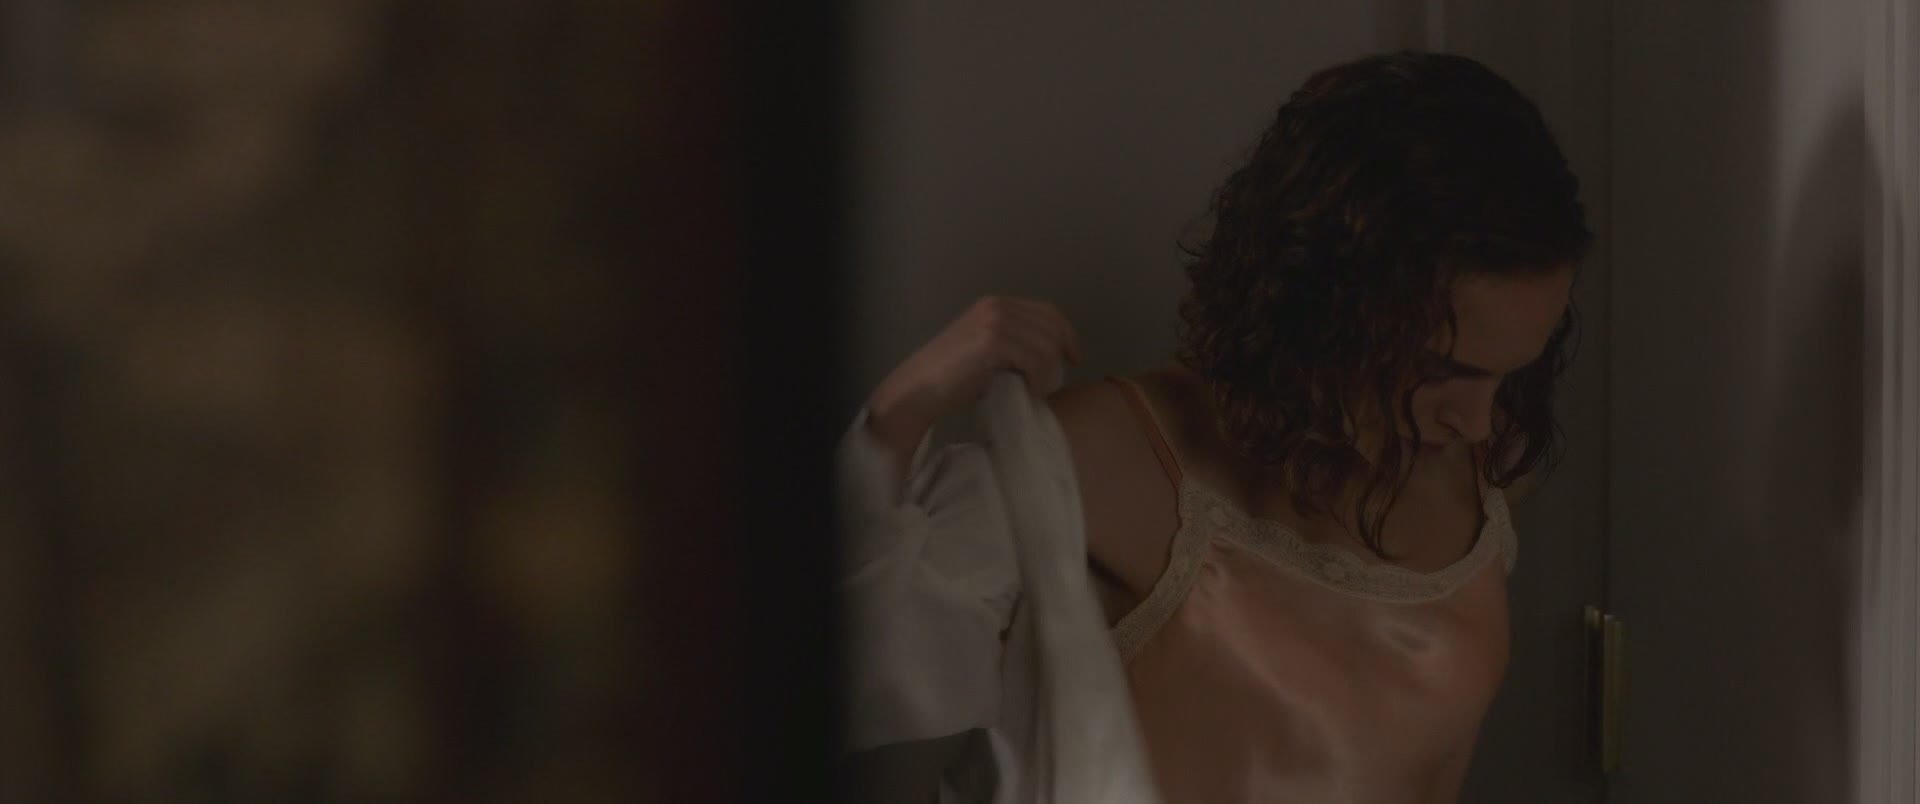 Natalie Portman Nude Planetarium 2016 Hd 1080p